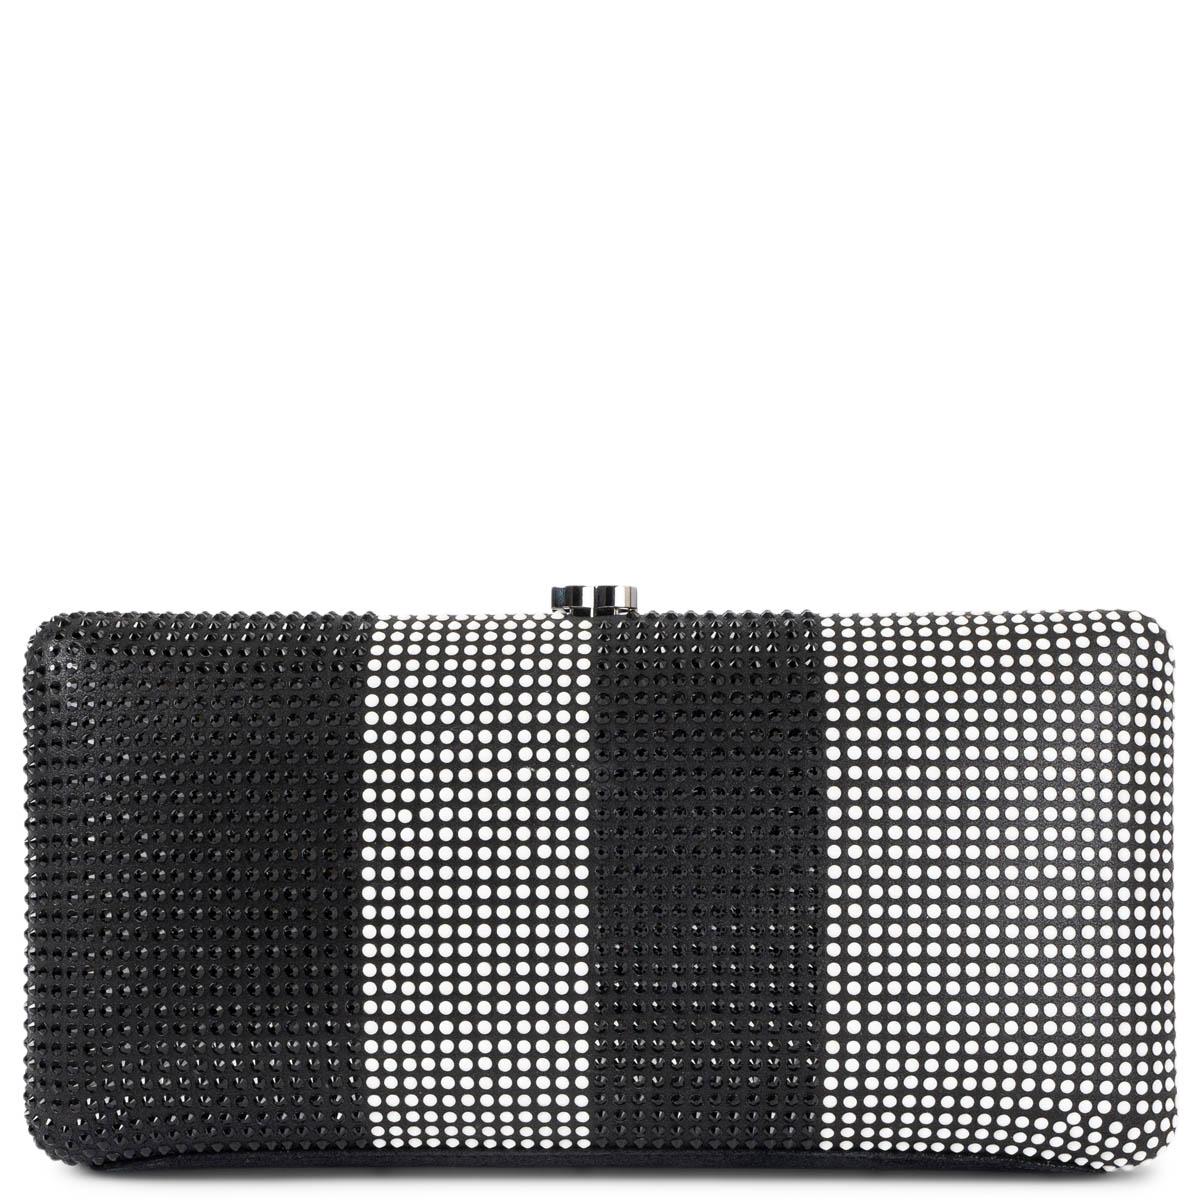 Black CHANEL black & white 2015 15C DUBAI STRASS CC MINAUDIERE Clutch Bag w Chain For Sale